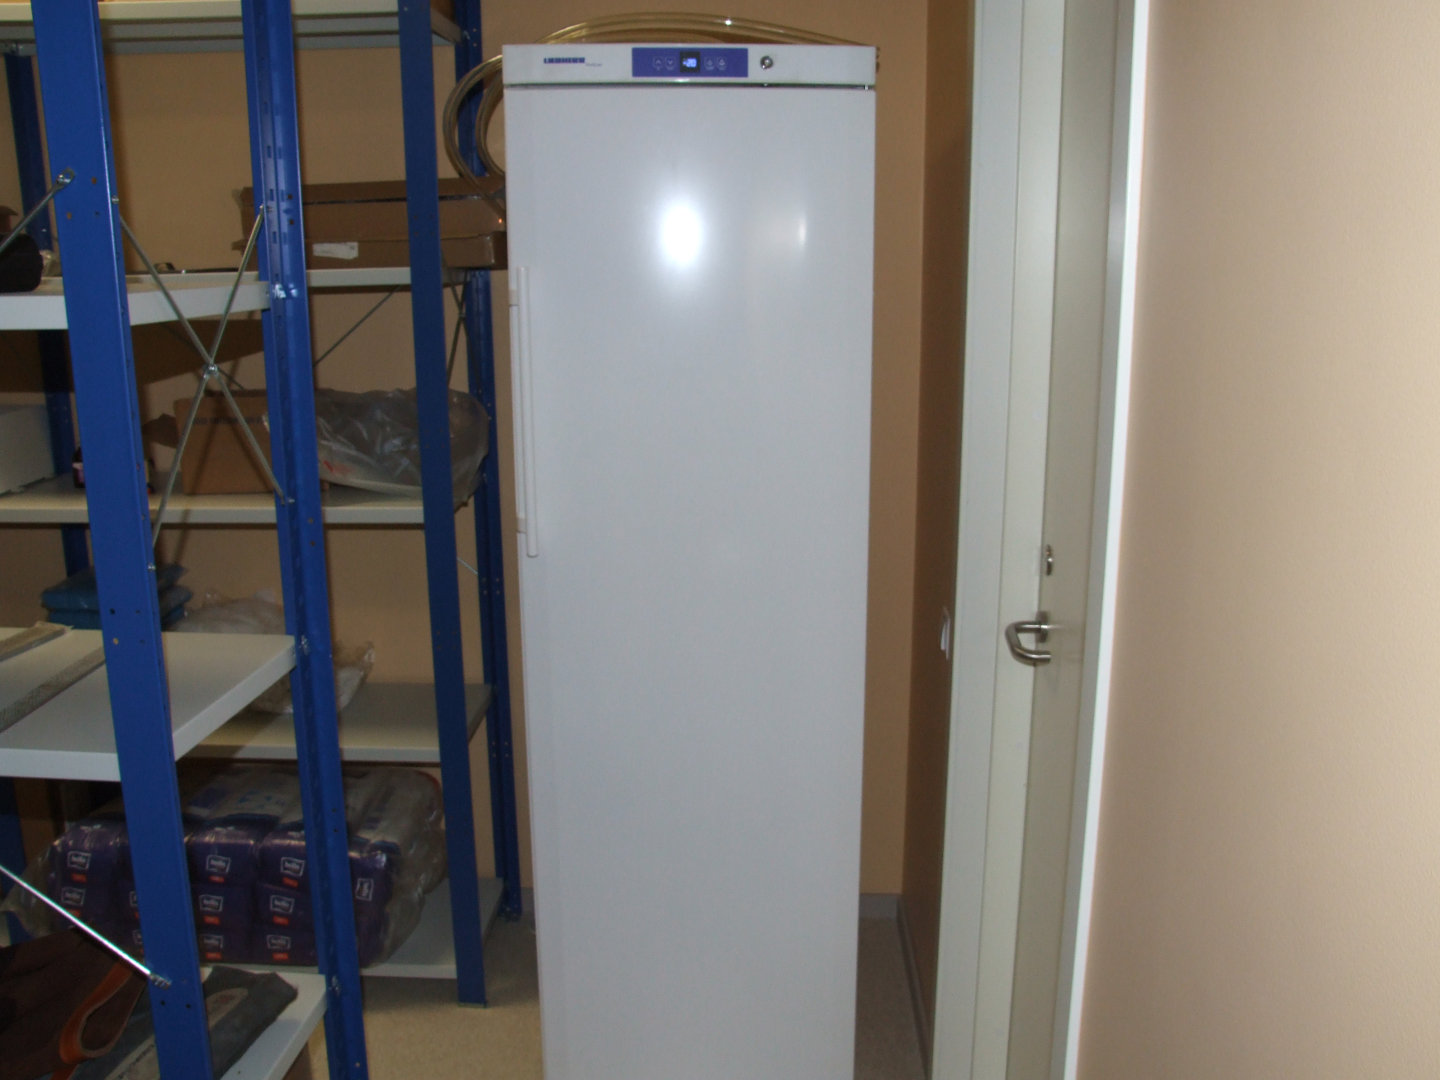 laboratory refrigerator